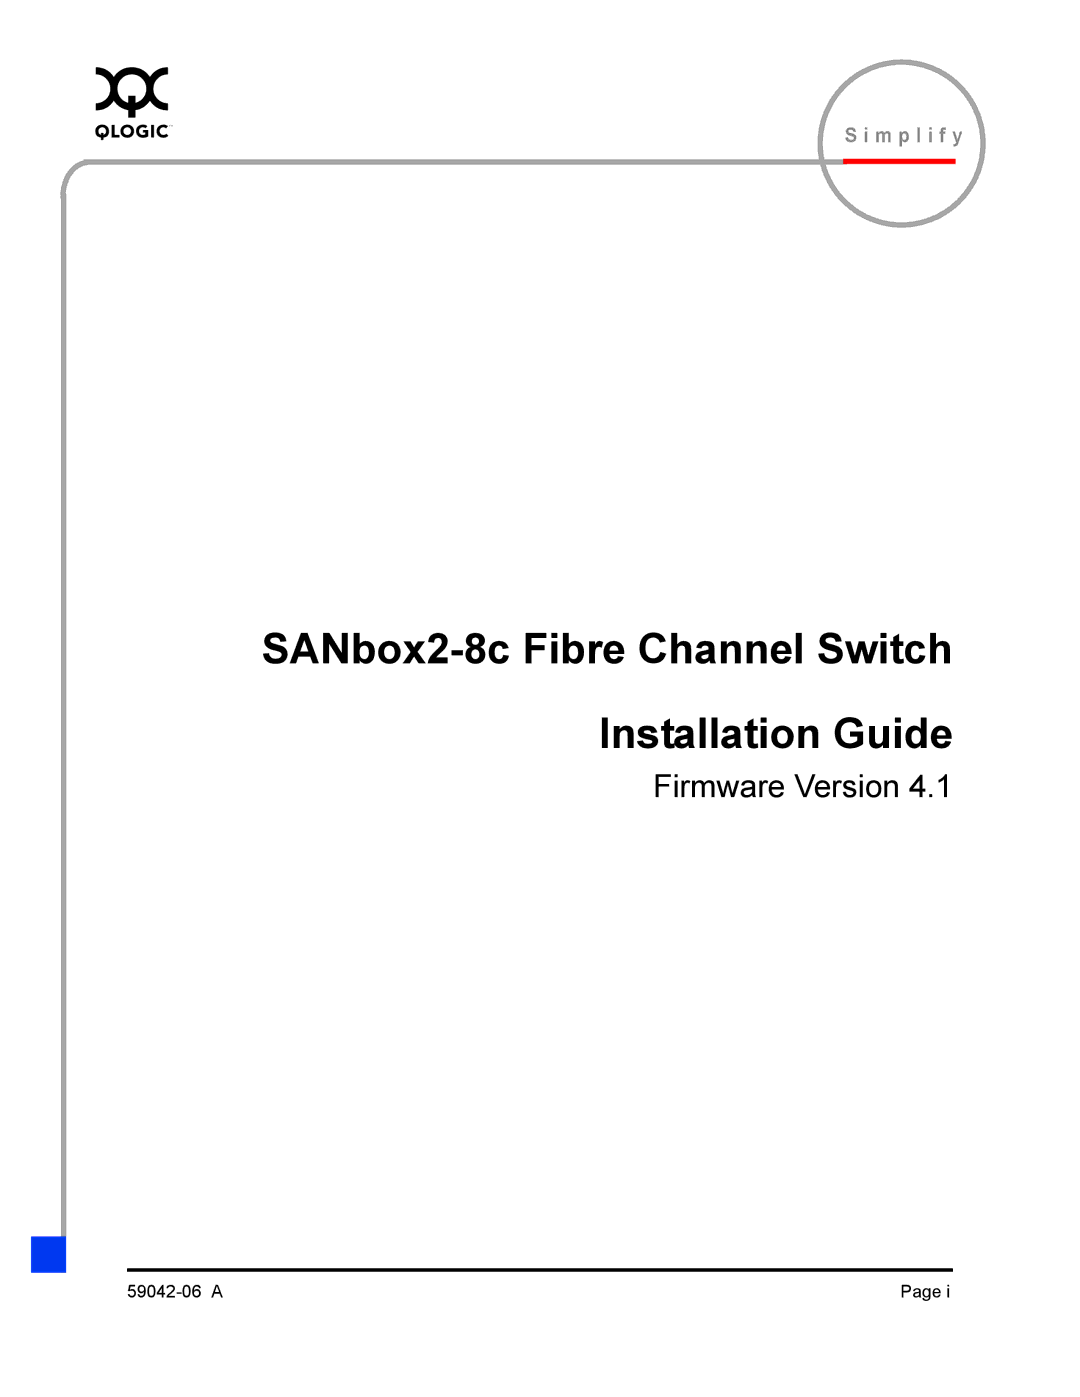 Q-Logic 2-8C manual SANbox2-8c Fibre Channel Switch Installation Guide 